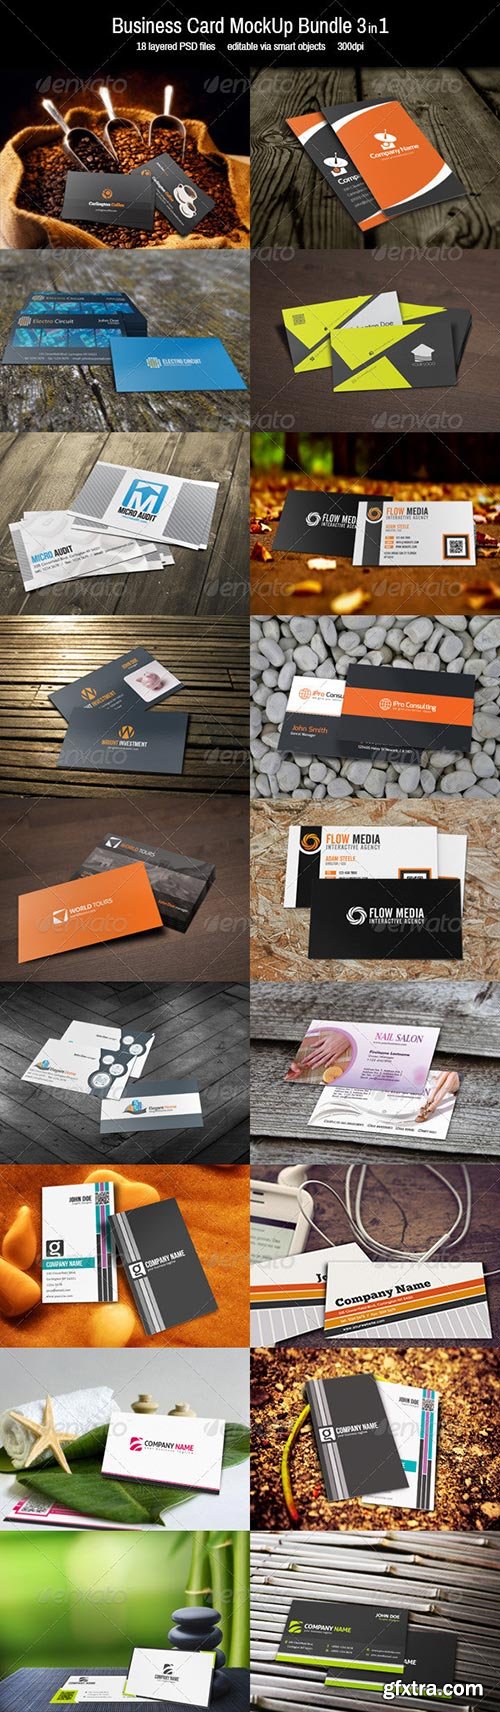 GraphicRiver - Business Card MockUp-Bundle 3in1 7254693